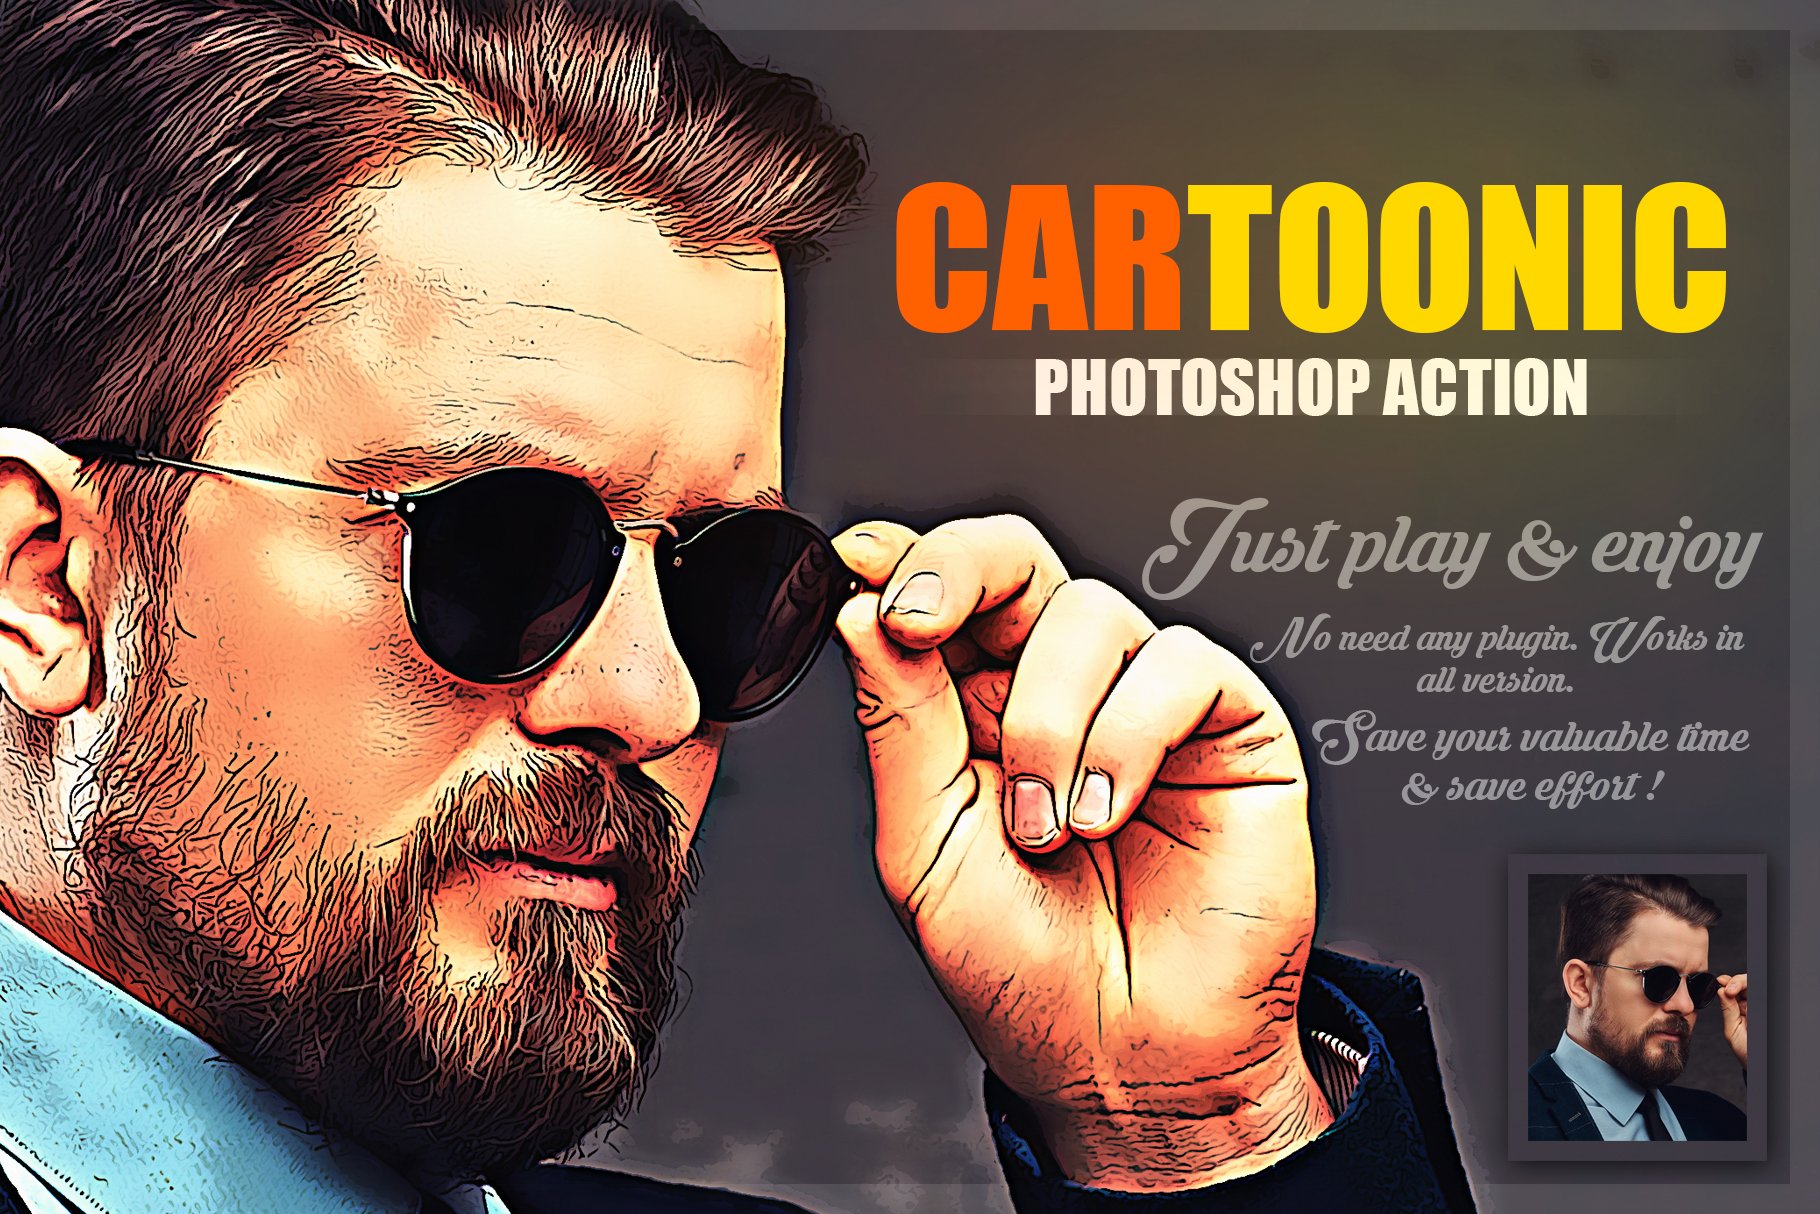 Cartoonic Photoshop Actioncover image.